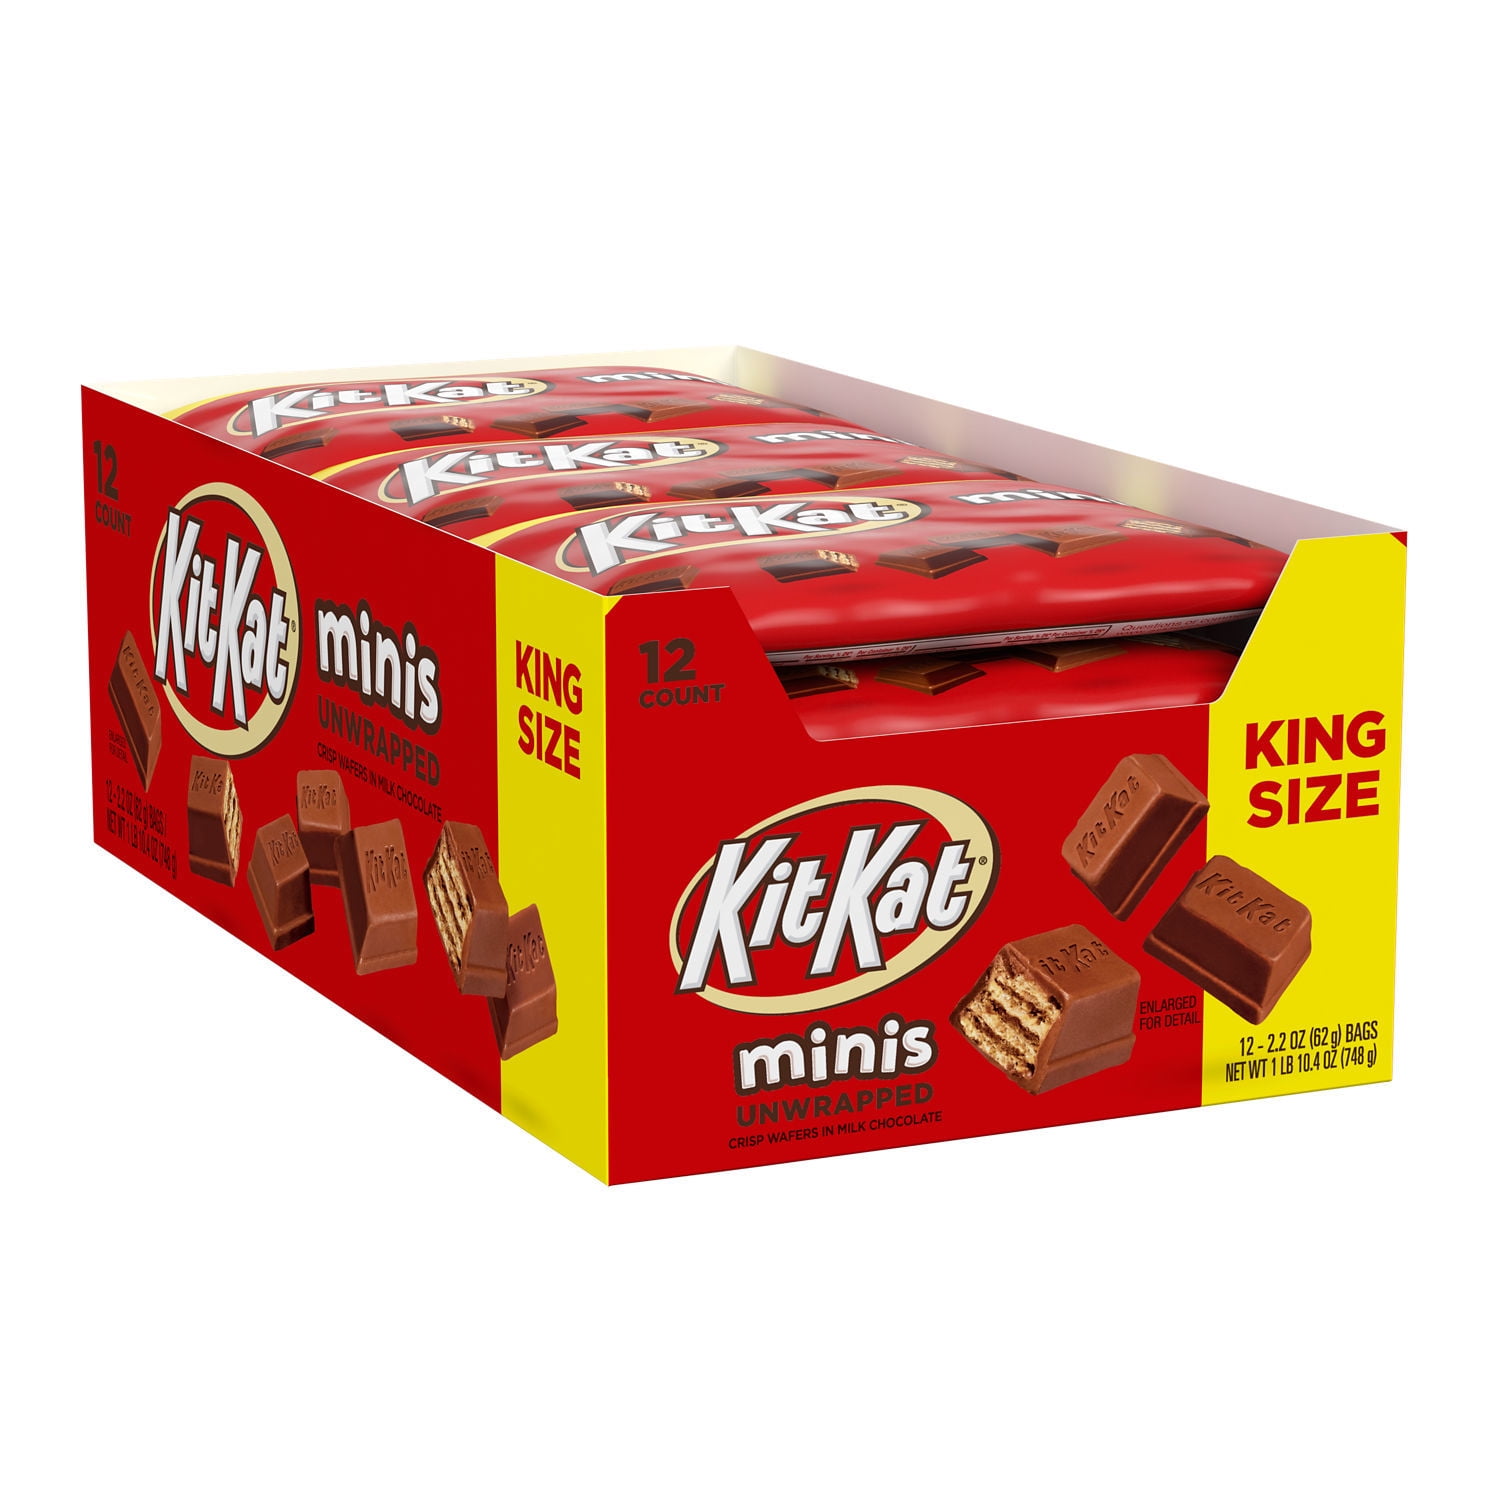 Kit Kat® Minis Milk Chocolate Wafer King Size Candy, Packs 2.2 oz, 12 Count